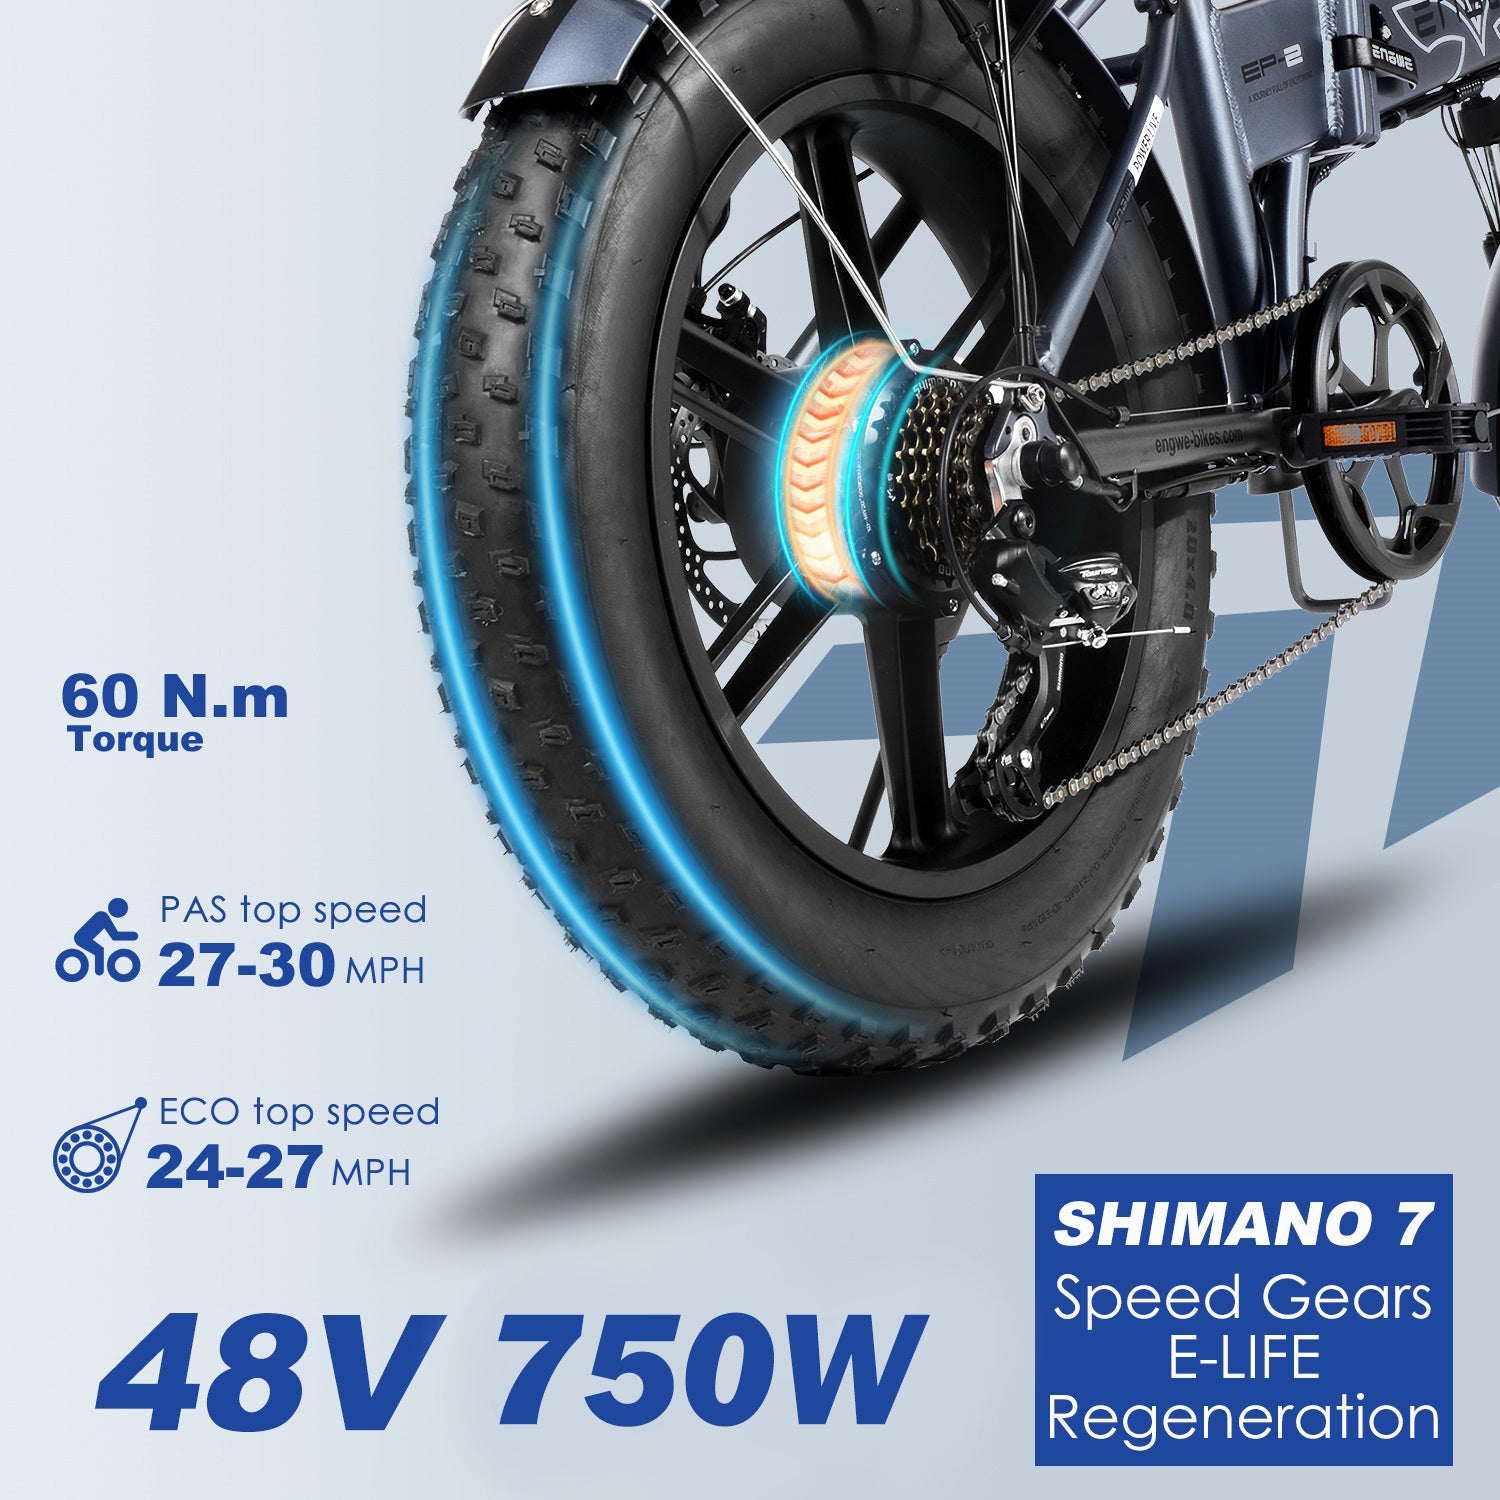 ENGWE ITALIA - EP-2 Pro (Upgraded Version) 750W Fat Foldable E-Bike